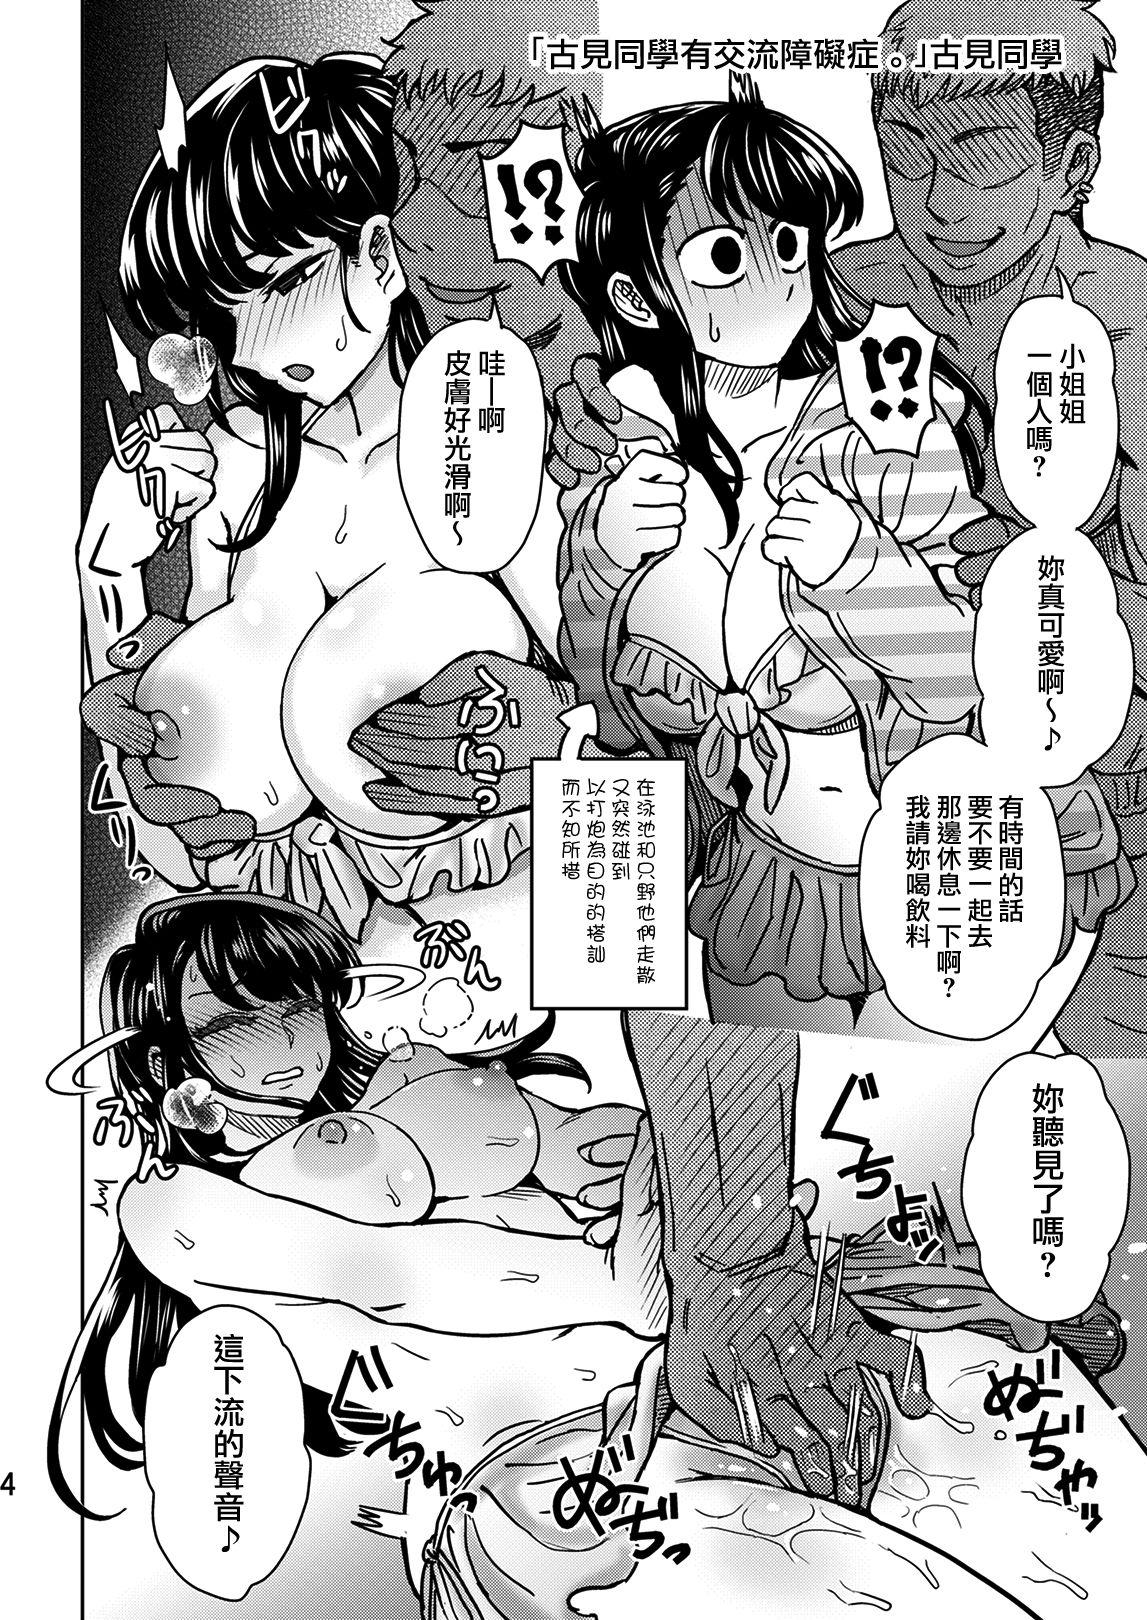 C95 Yorozu NTR Short Manga Shuu 4